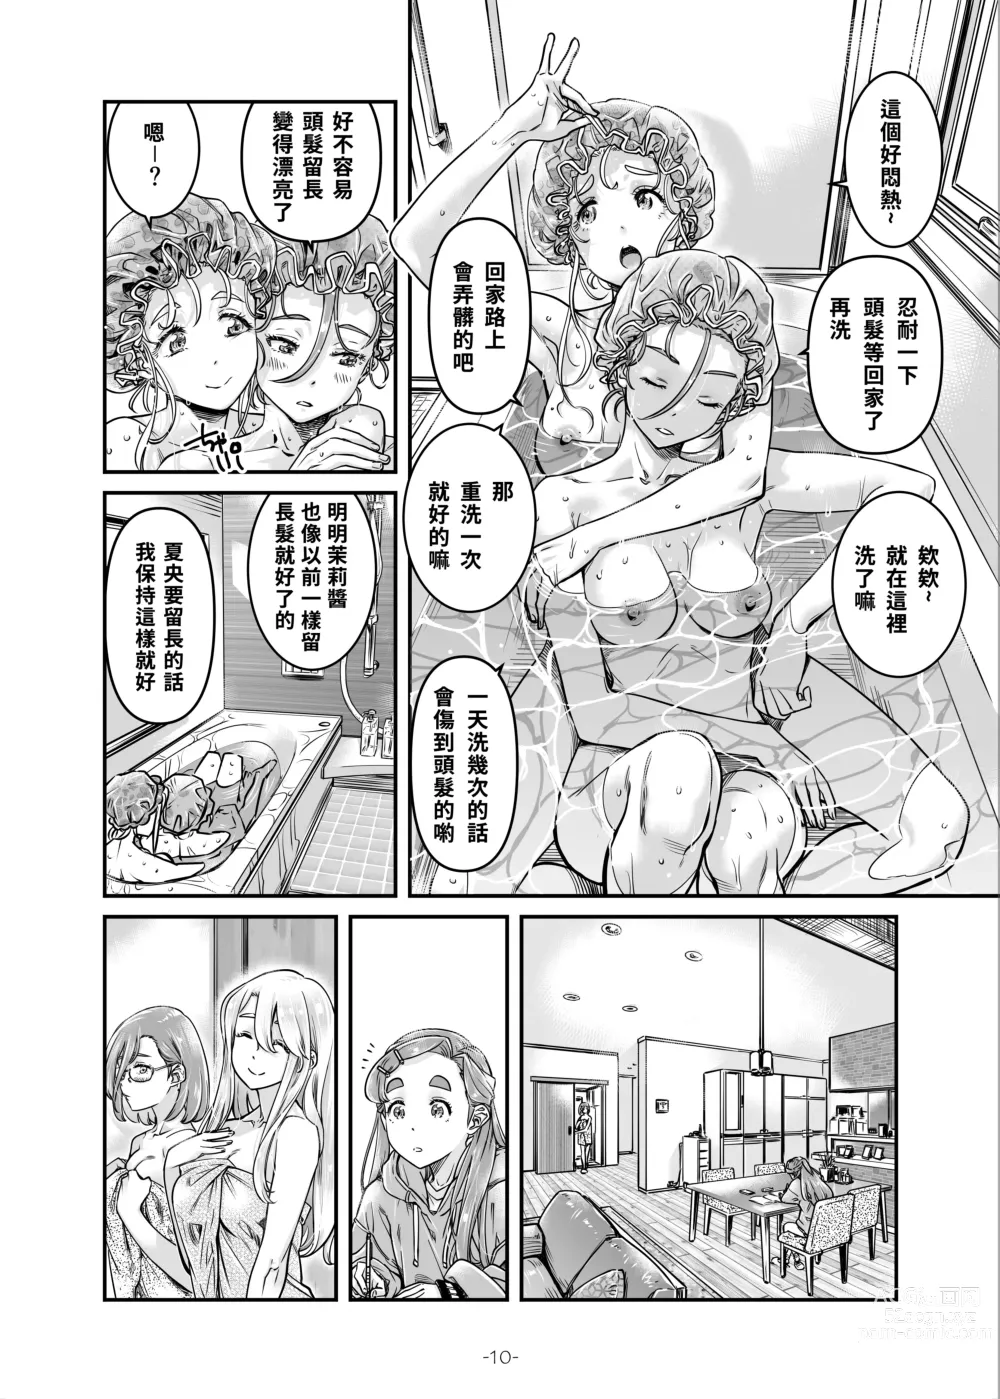 Page 11 of doujinshi Nadeshiko Hiyori 2nd season - SERIES of GIRLs LOE STORY ~episode 3~